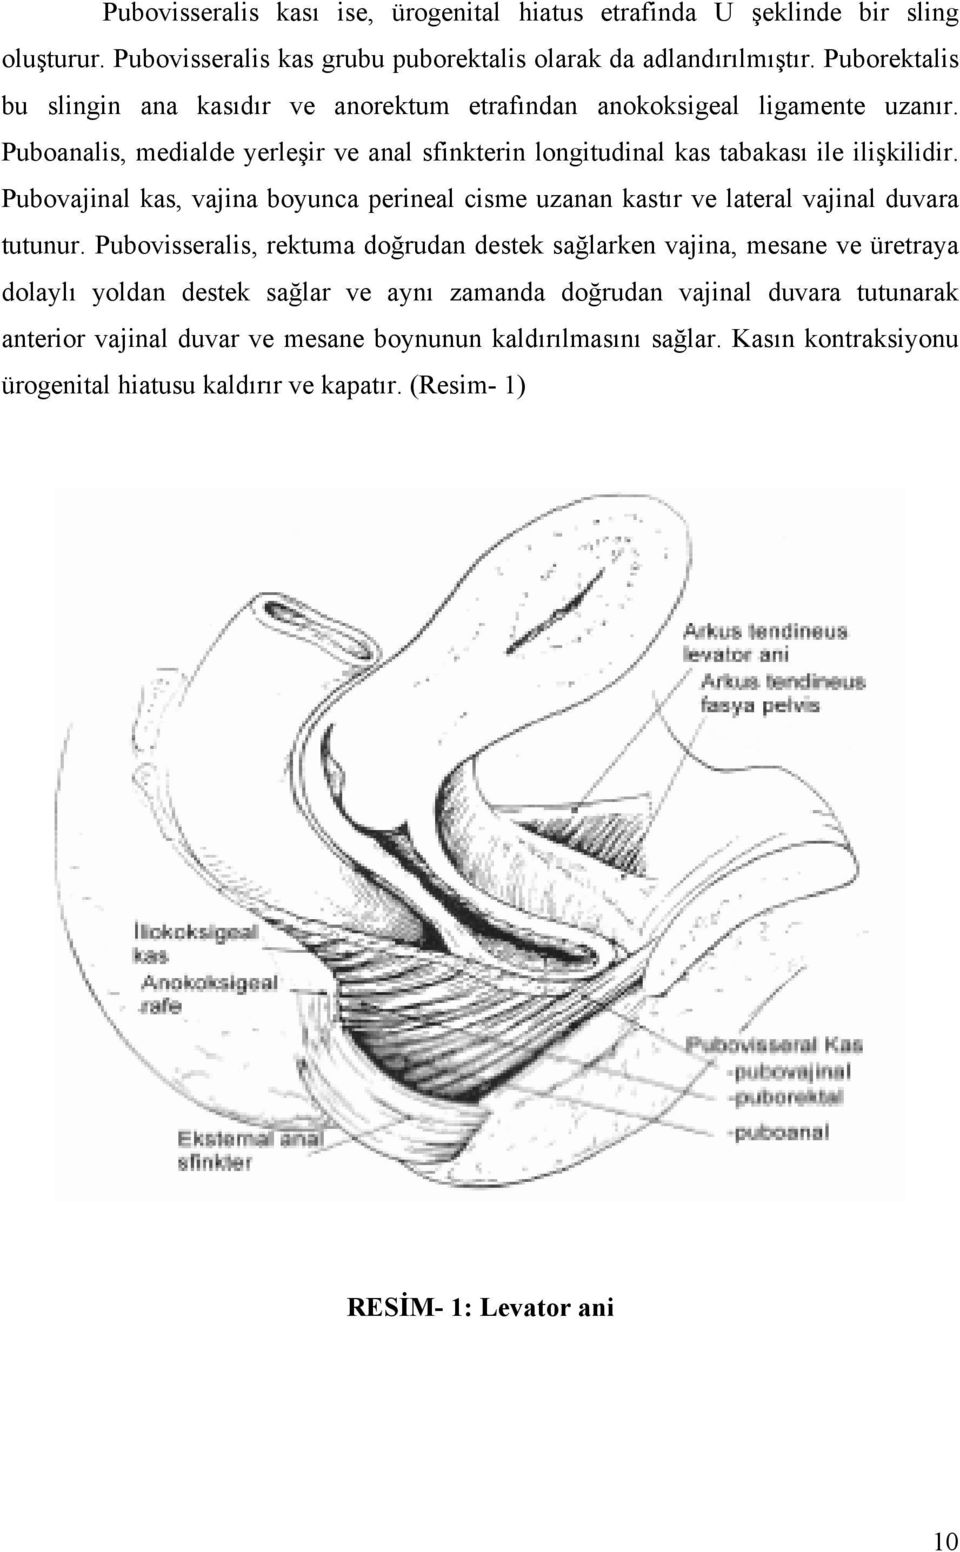 Pubovajinal kas, vajina boyunca perineal cisme uzanan kastır ve lateral vajinal duvara tutunur.